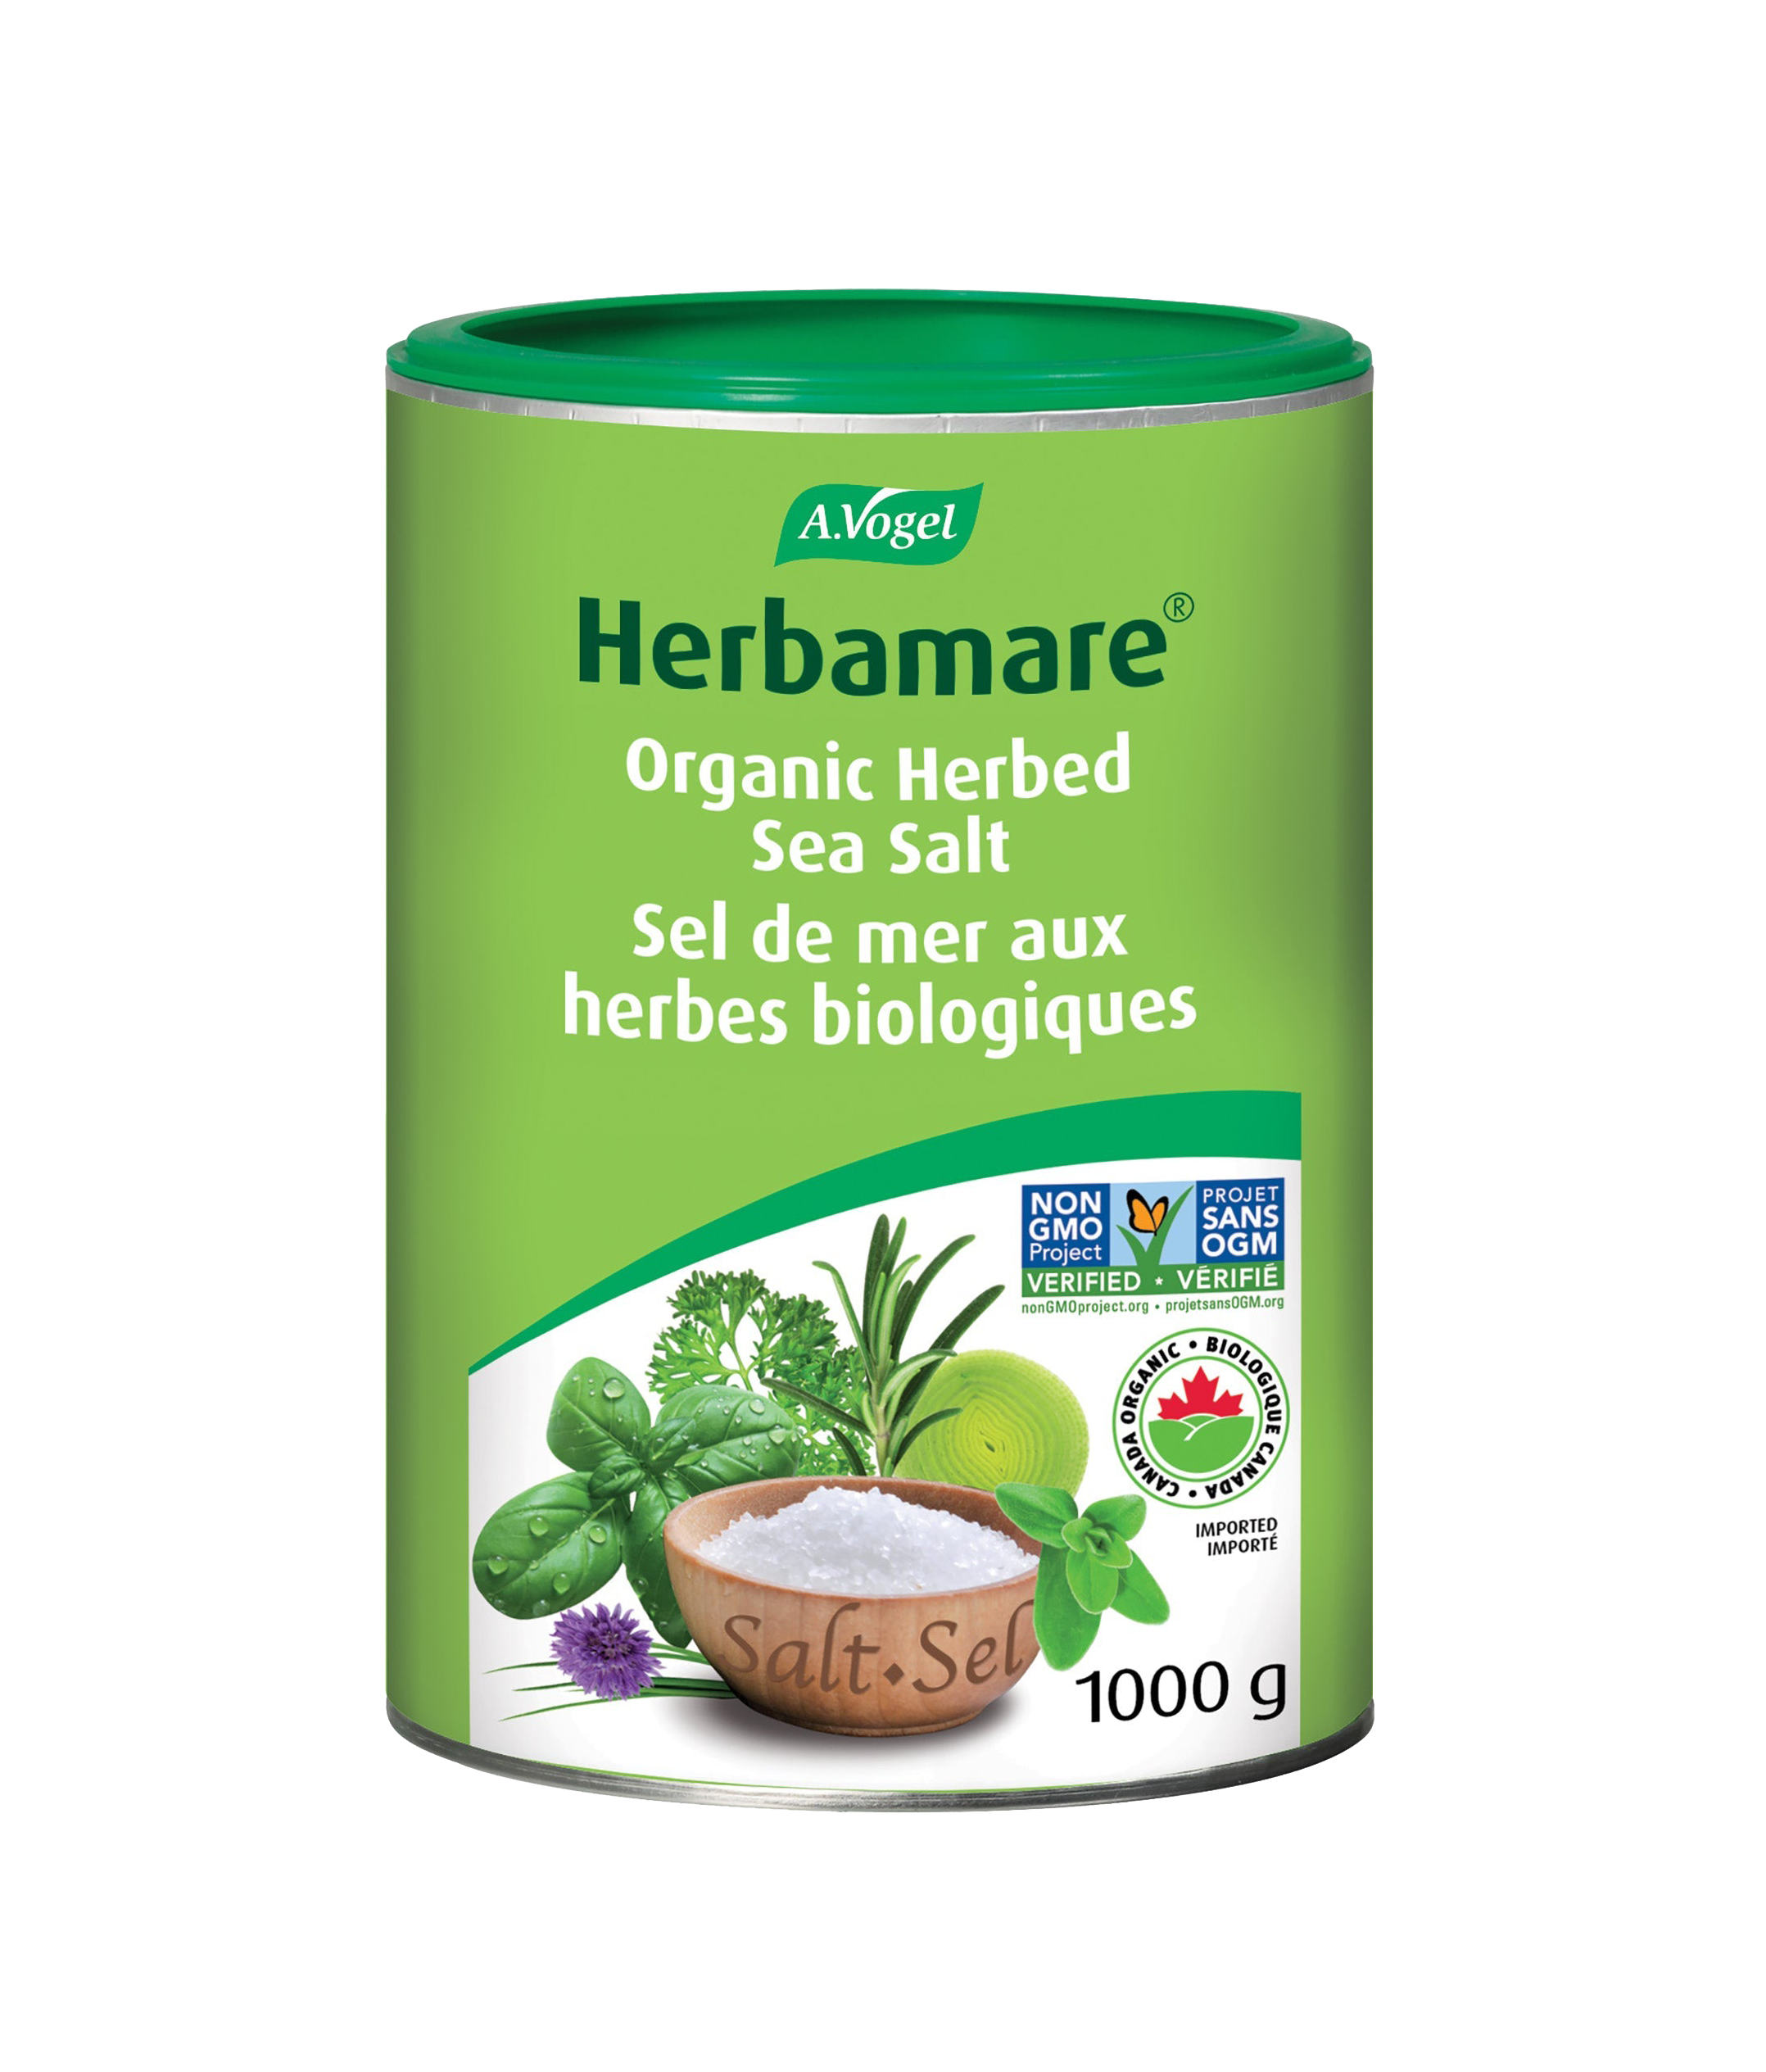 Herbamare Original Herbed Sea Salt 1000g